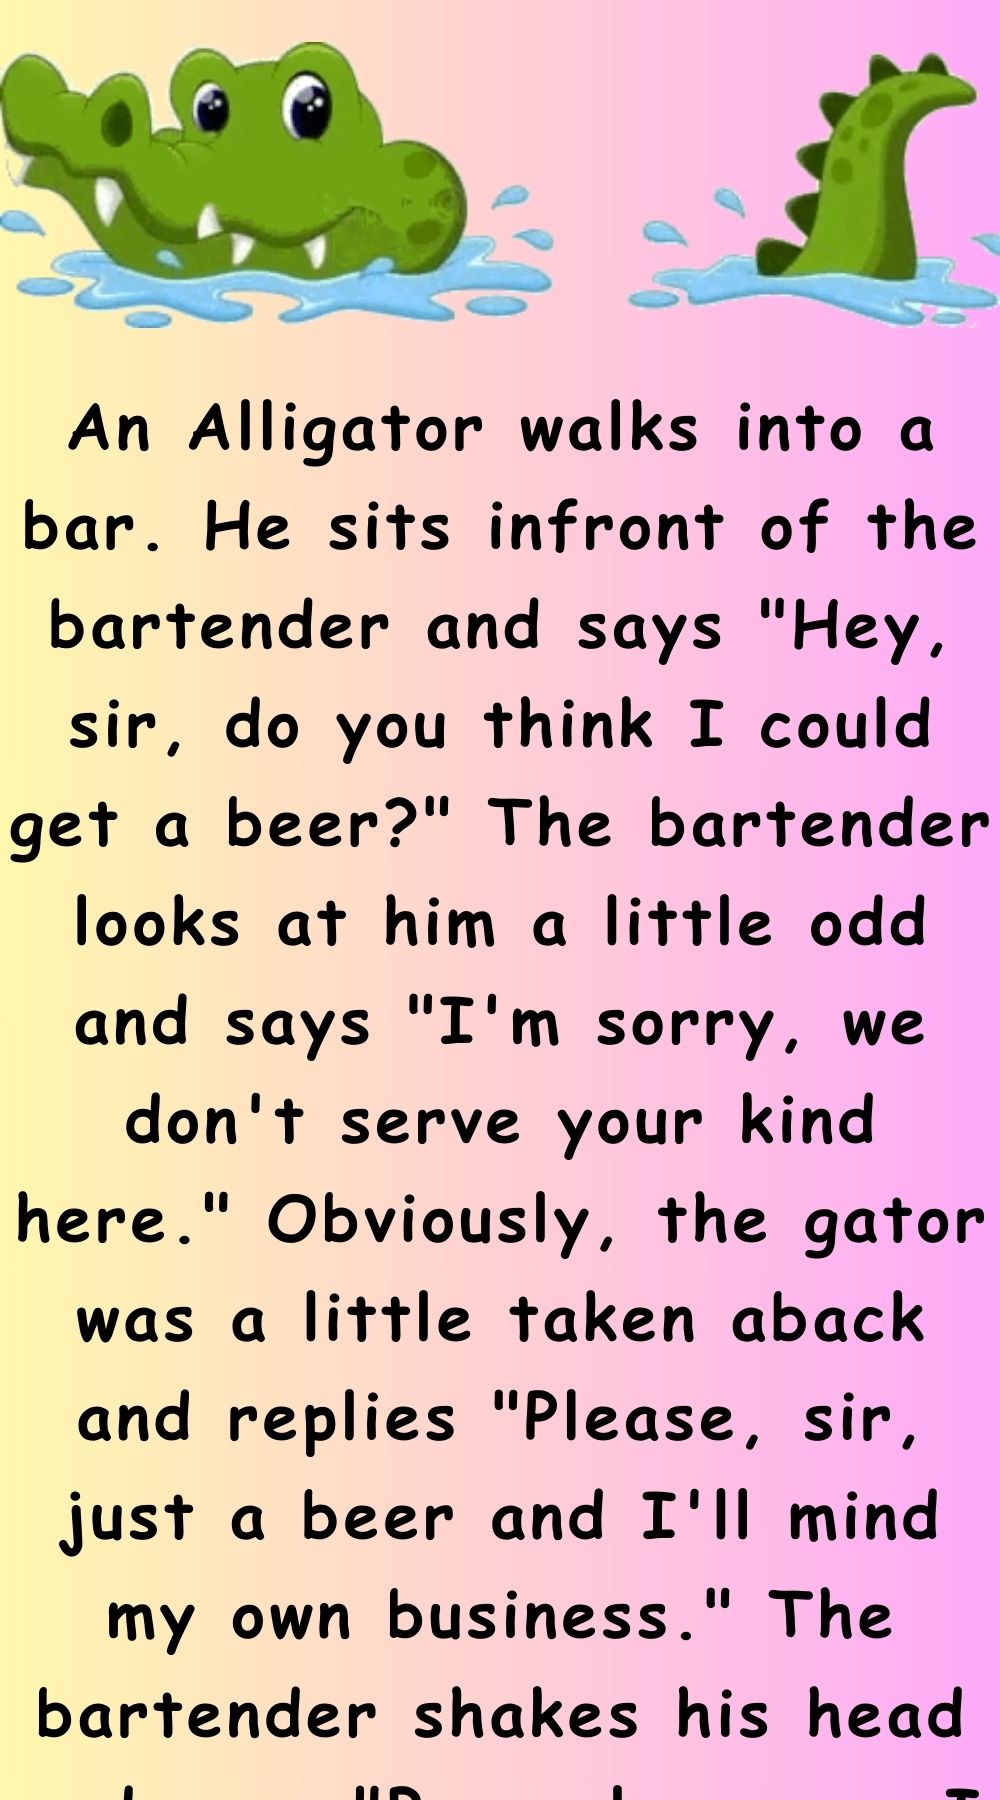 An Alligator walks into a bar